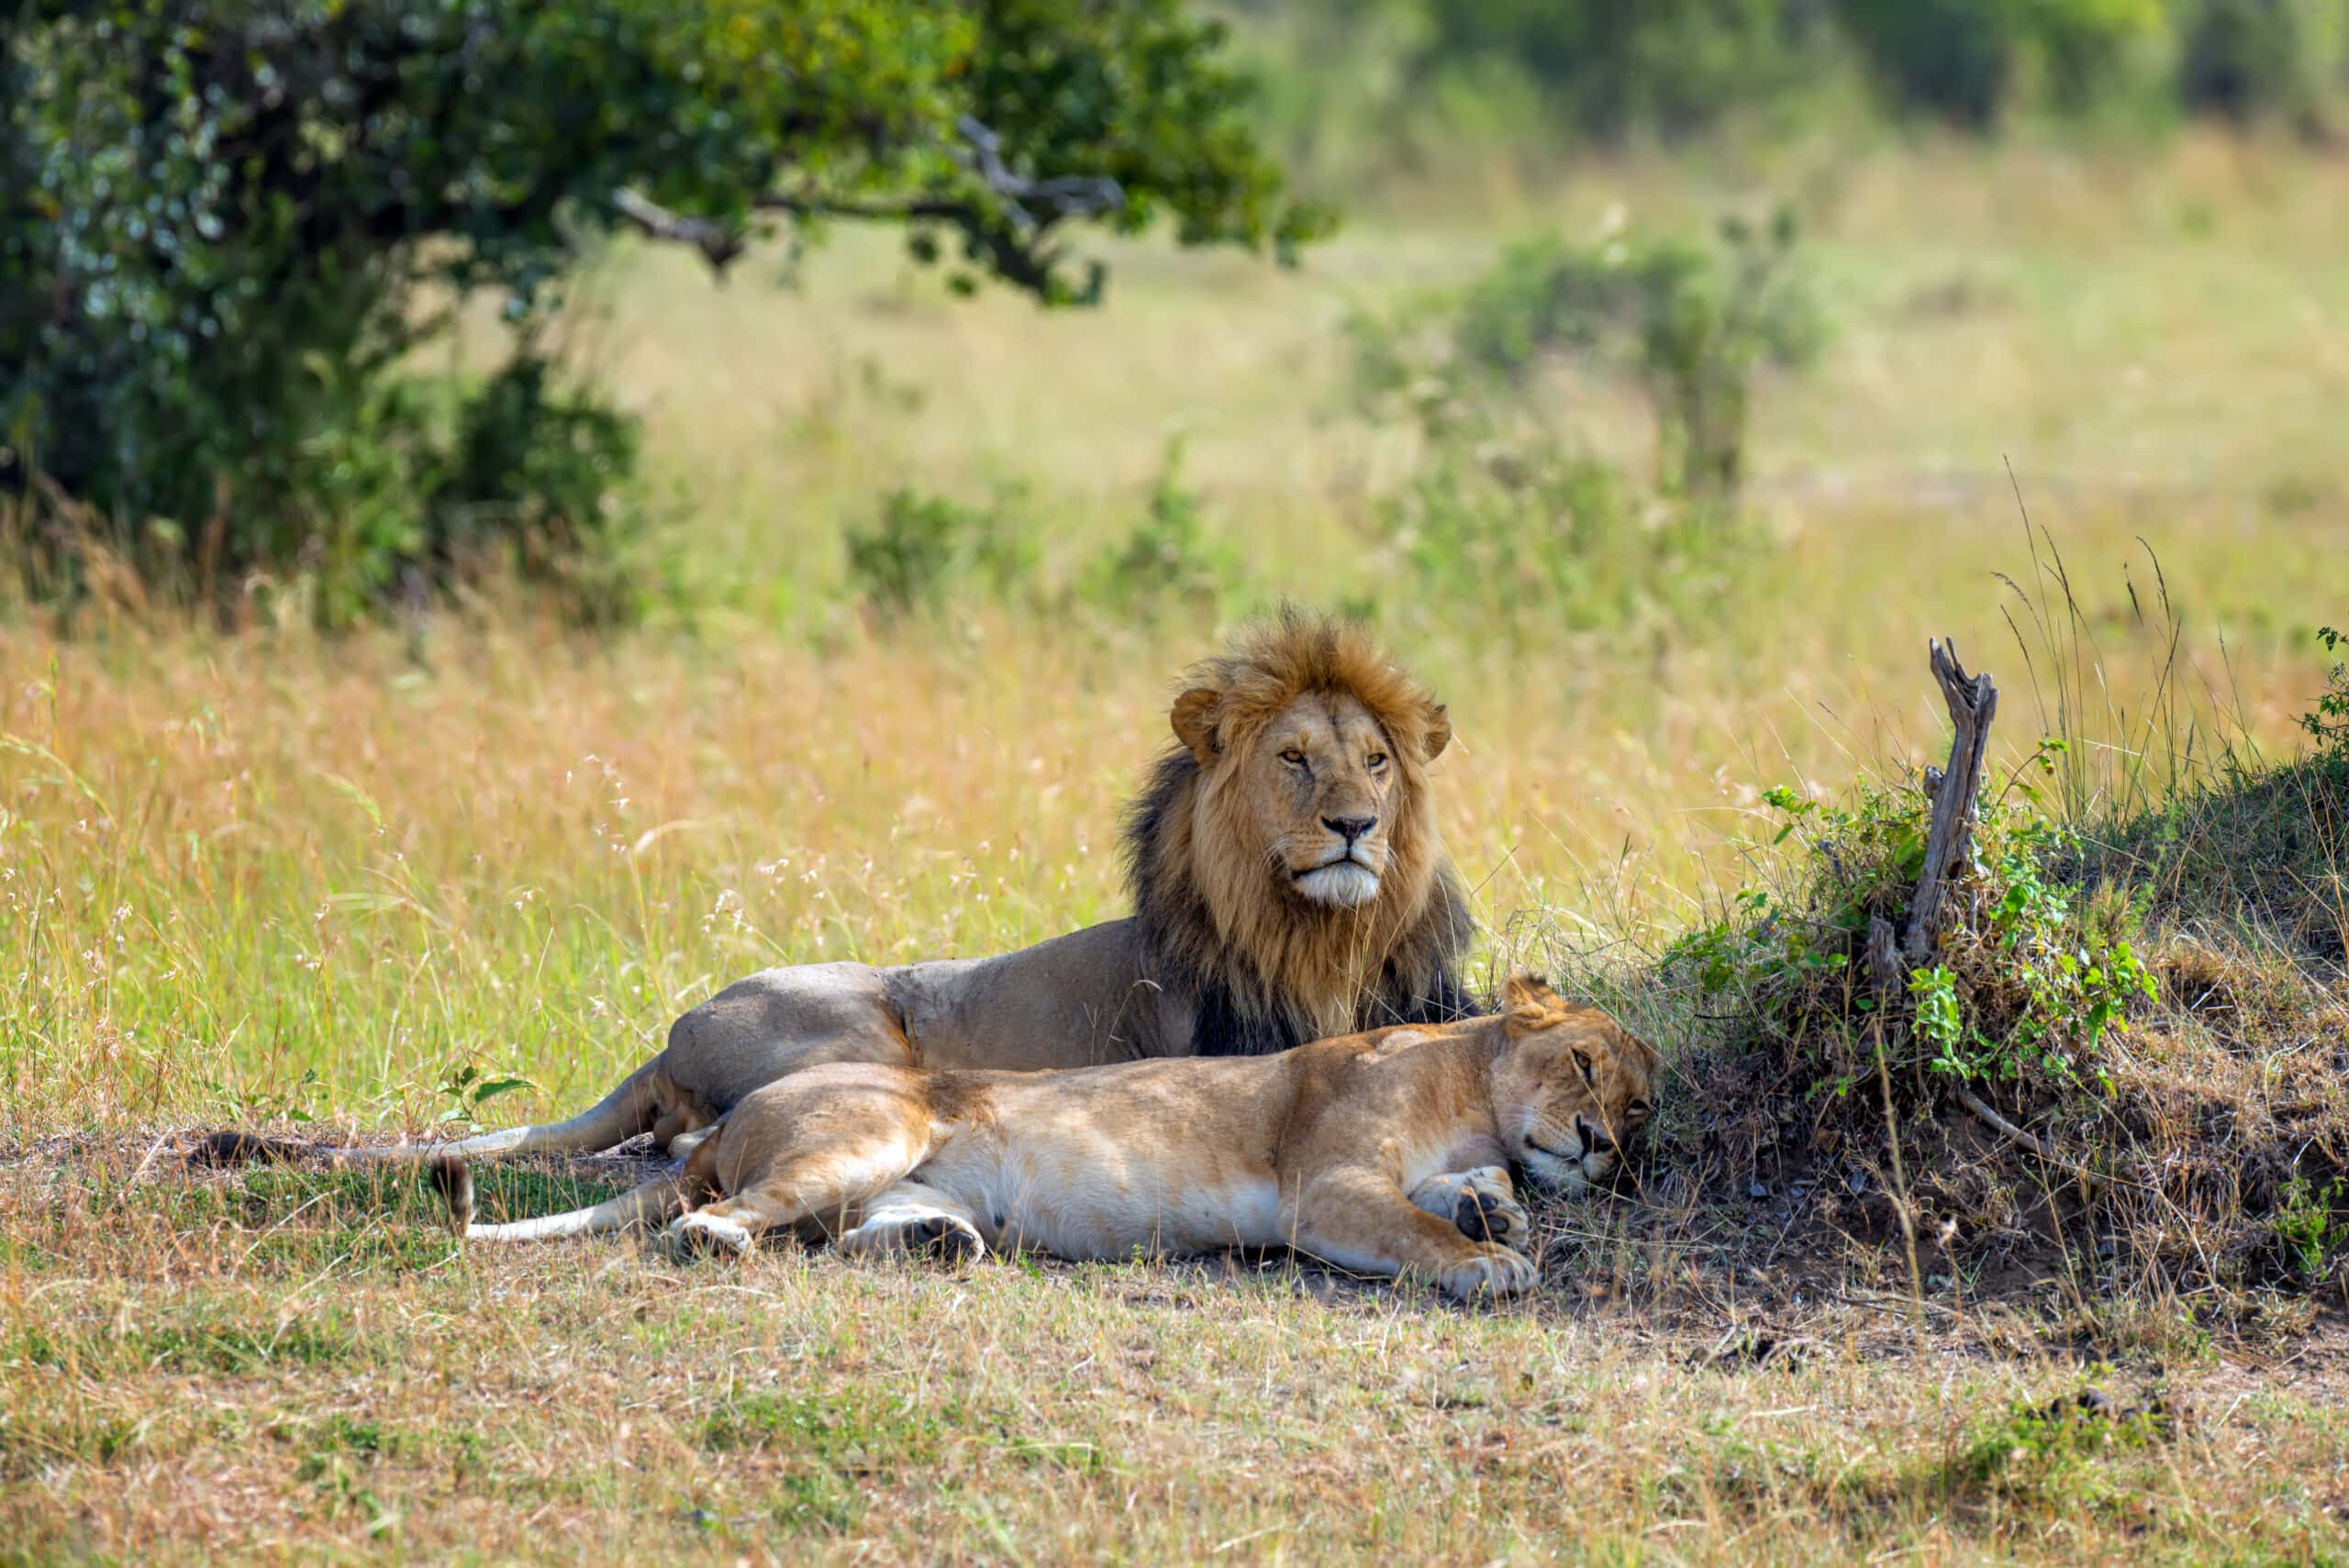 lion in national park of kenya 2021 08 26 15 56 05 utc scaled